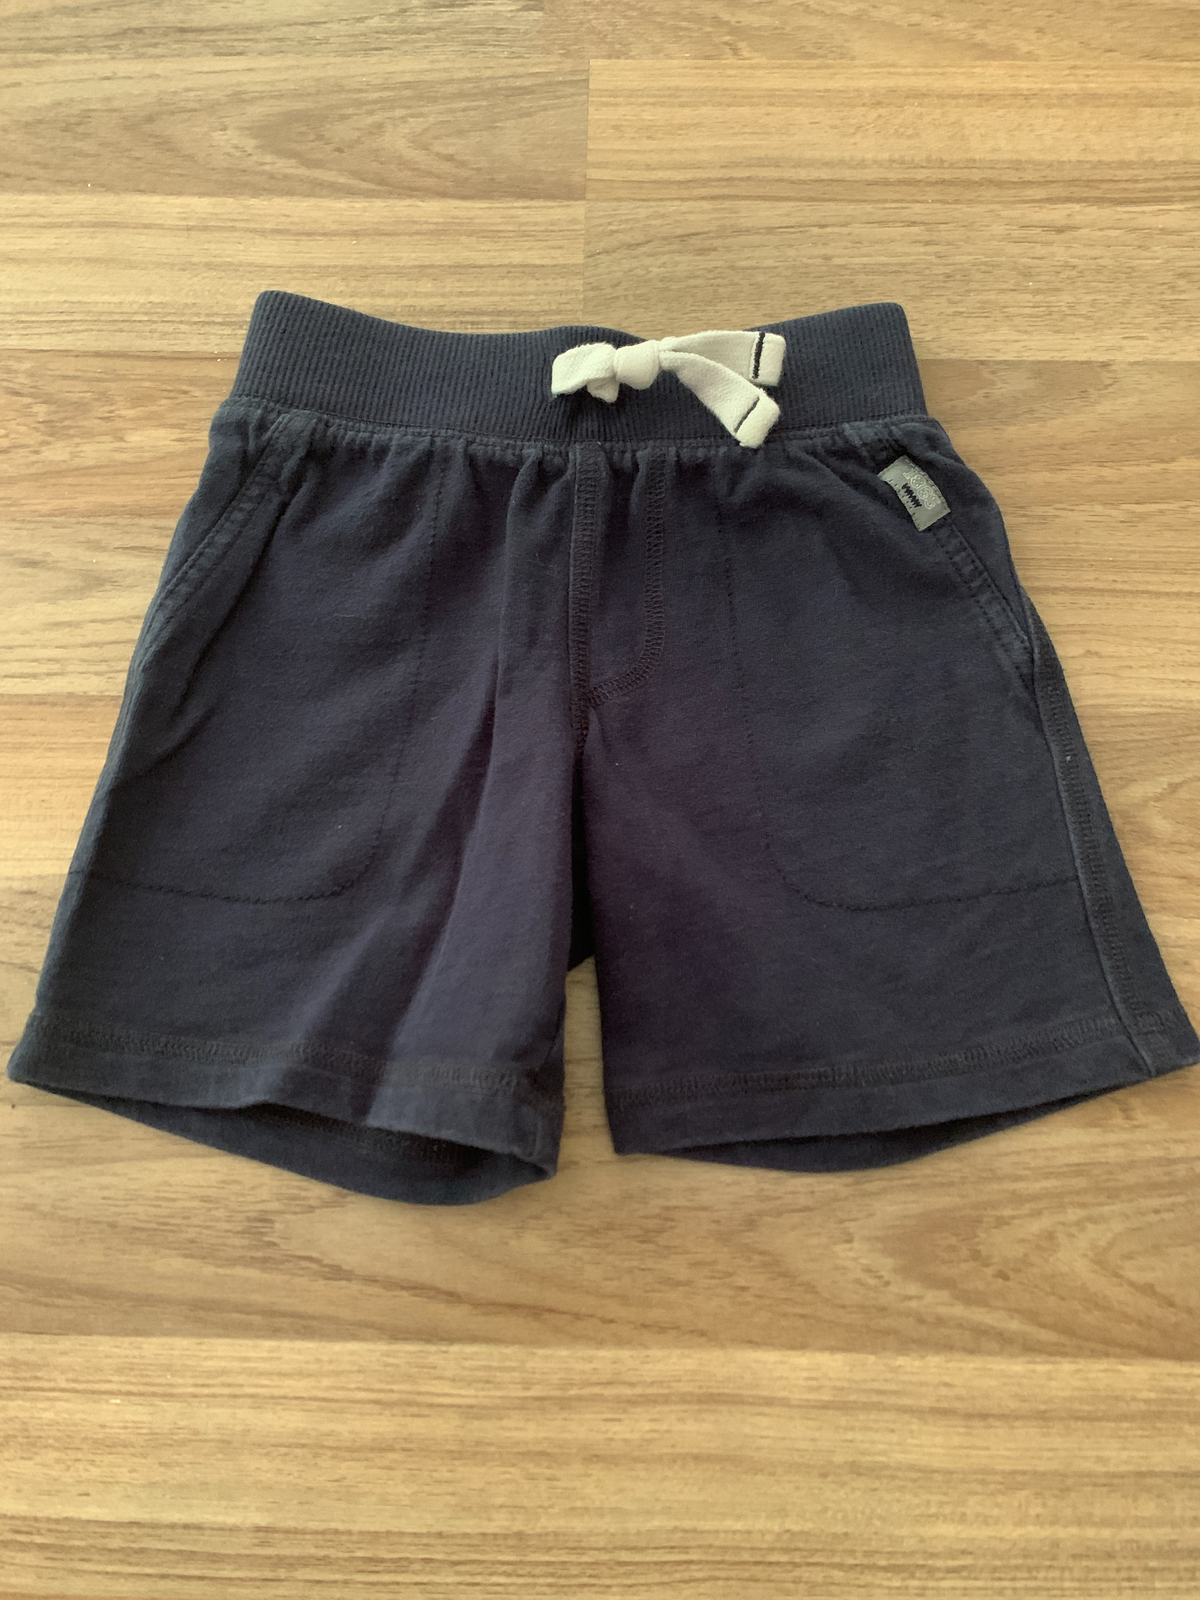 Shorts (Boys Size 2)